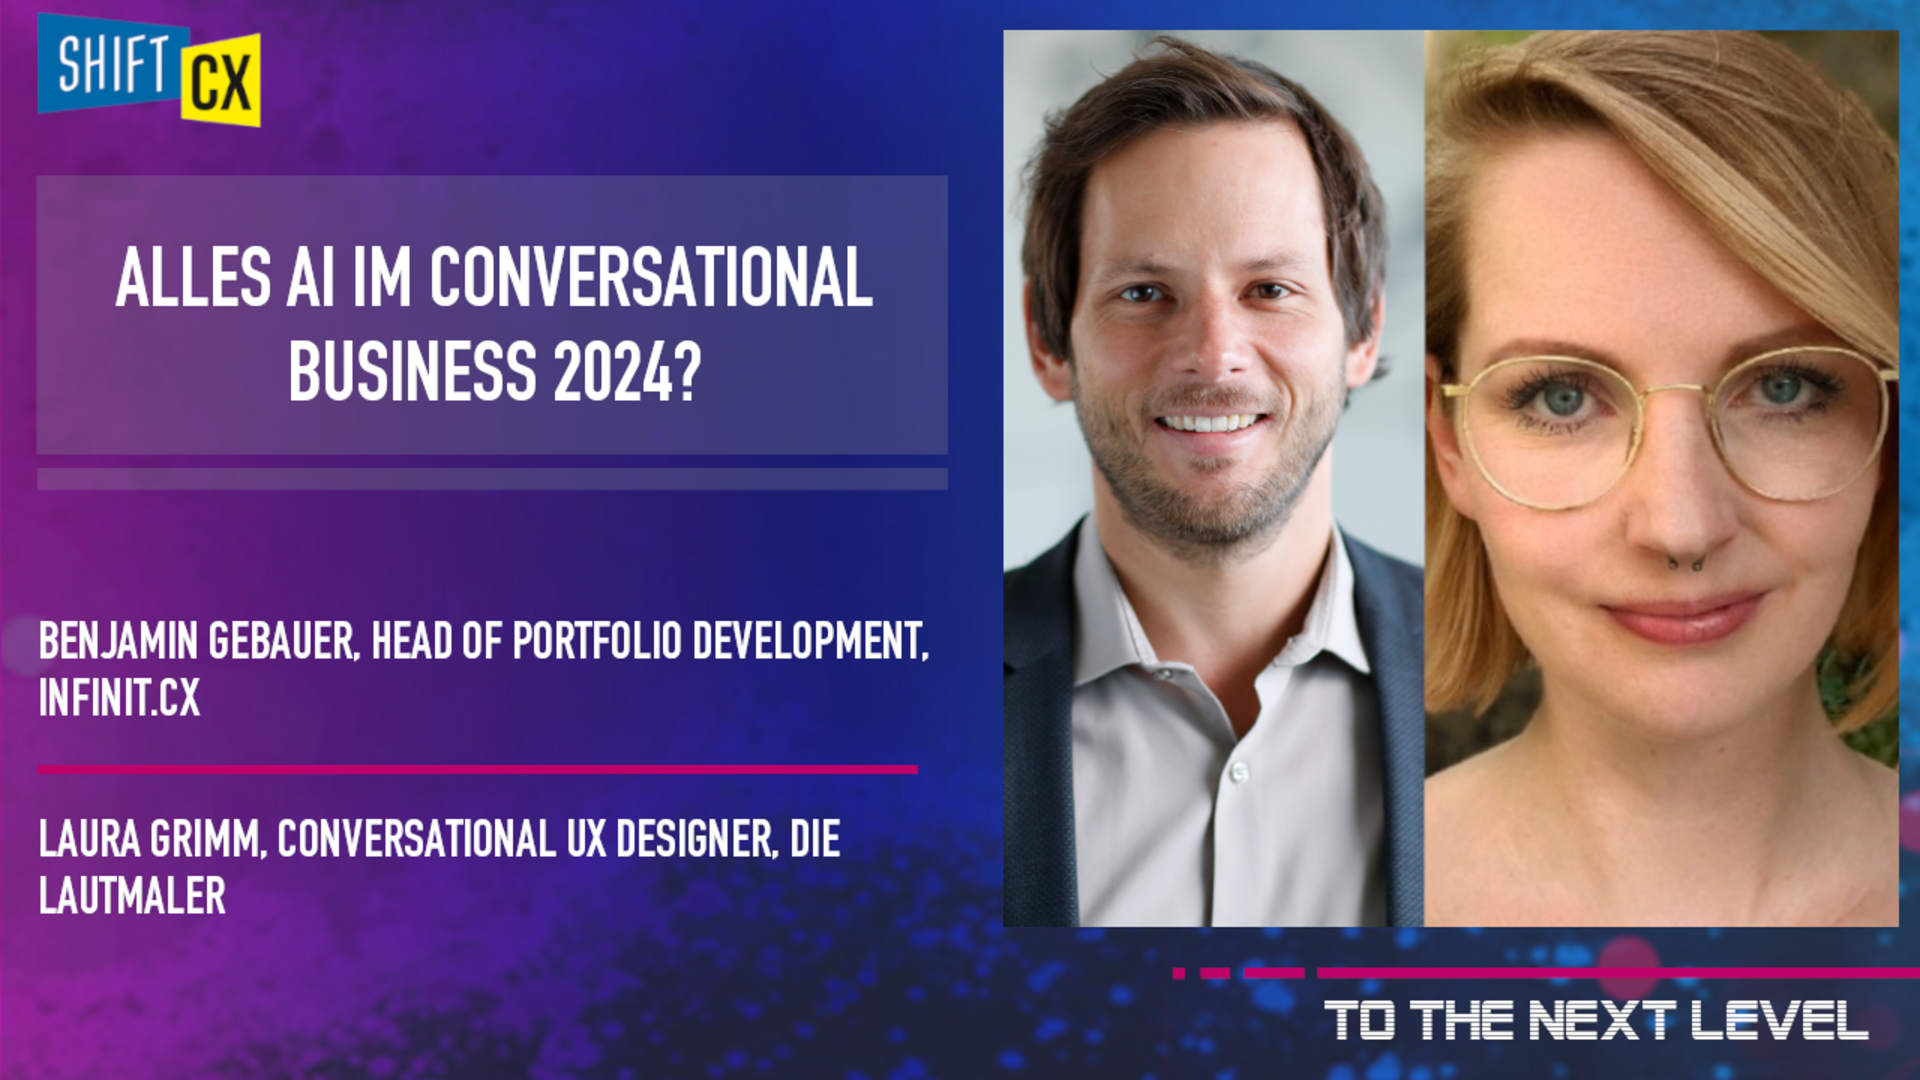 Alles AI im Conversational Business 2024?